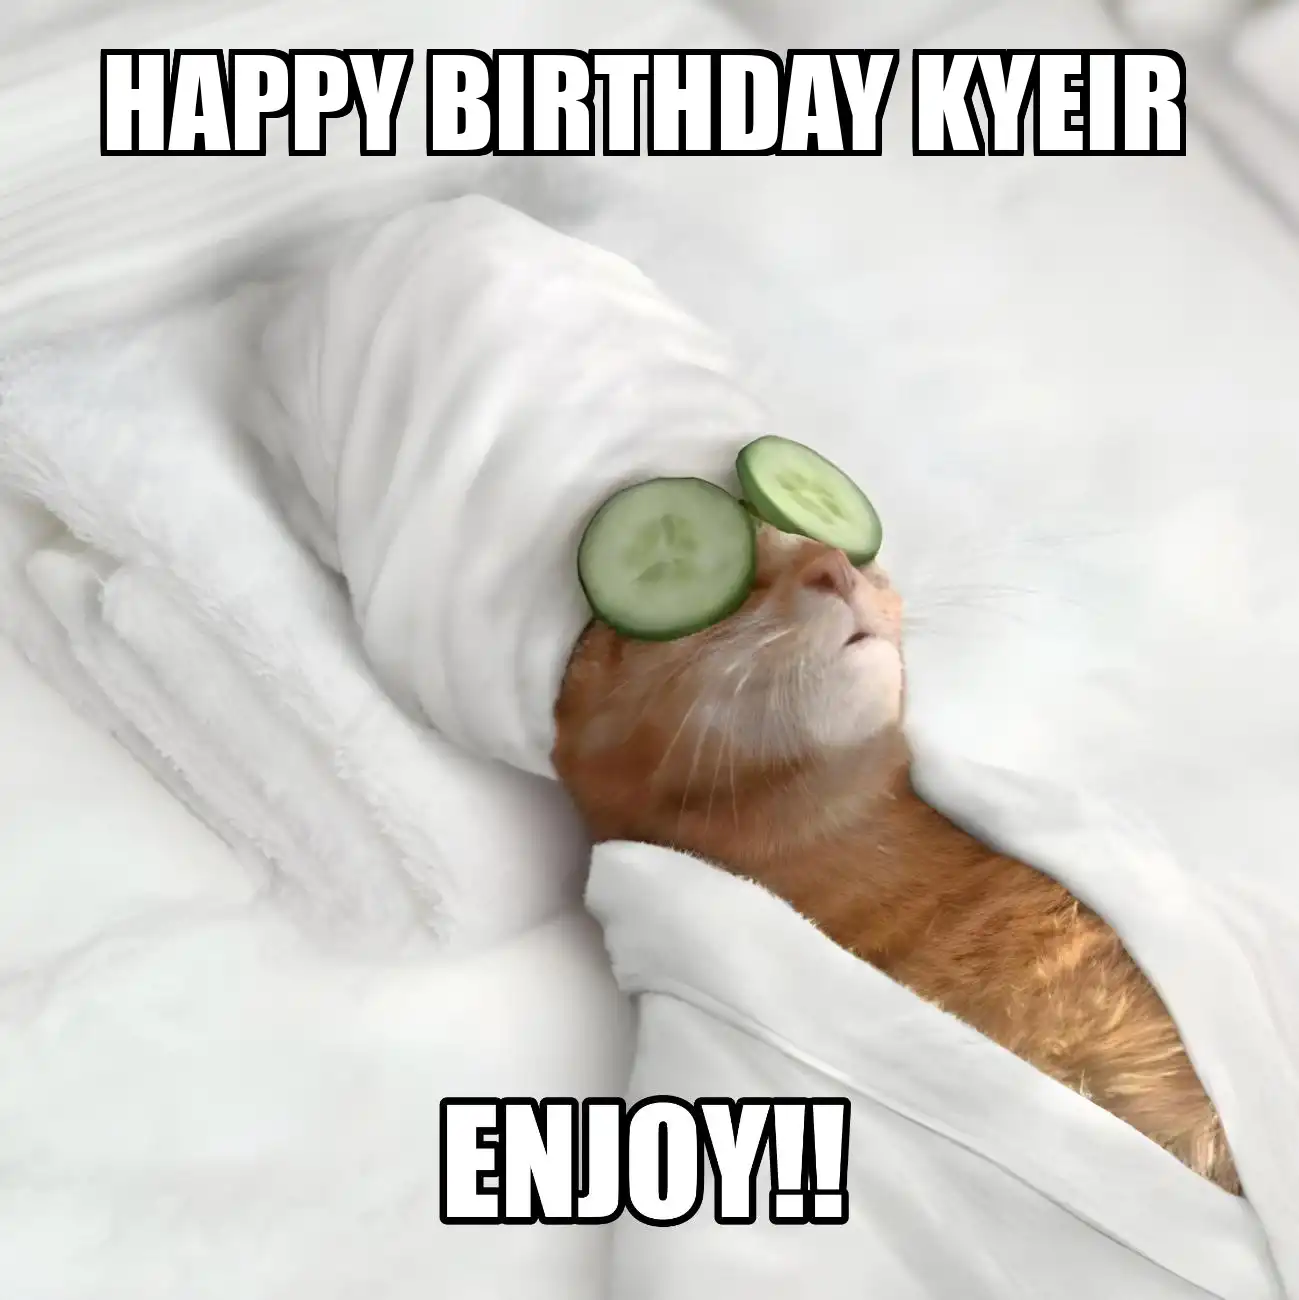 Happy Birthday Kyeir Enjoy Cat Meme